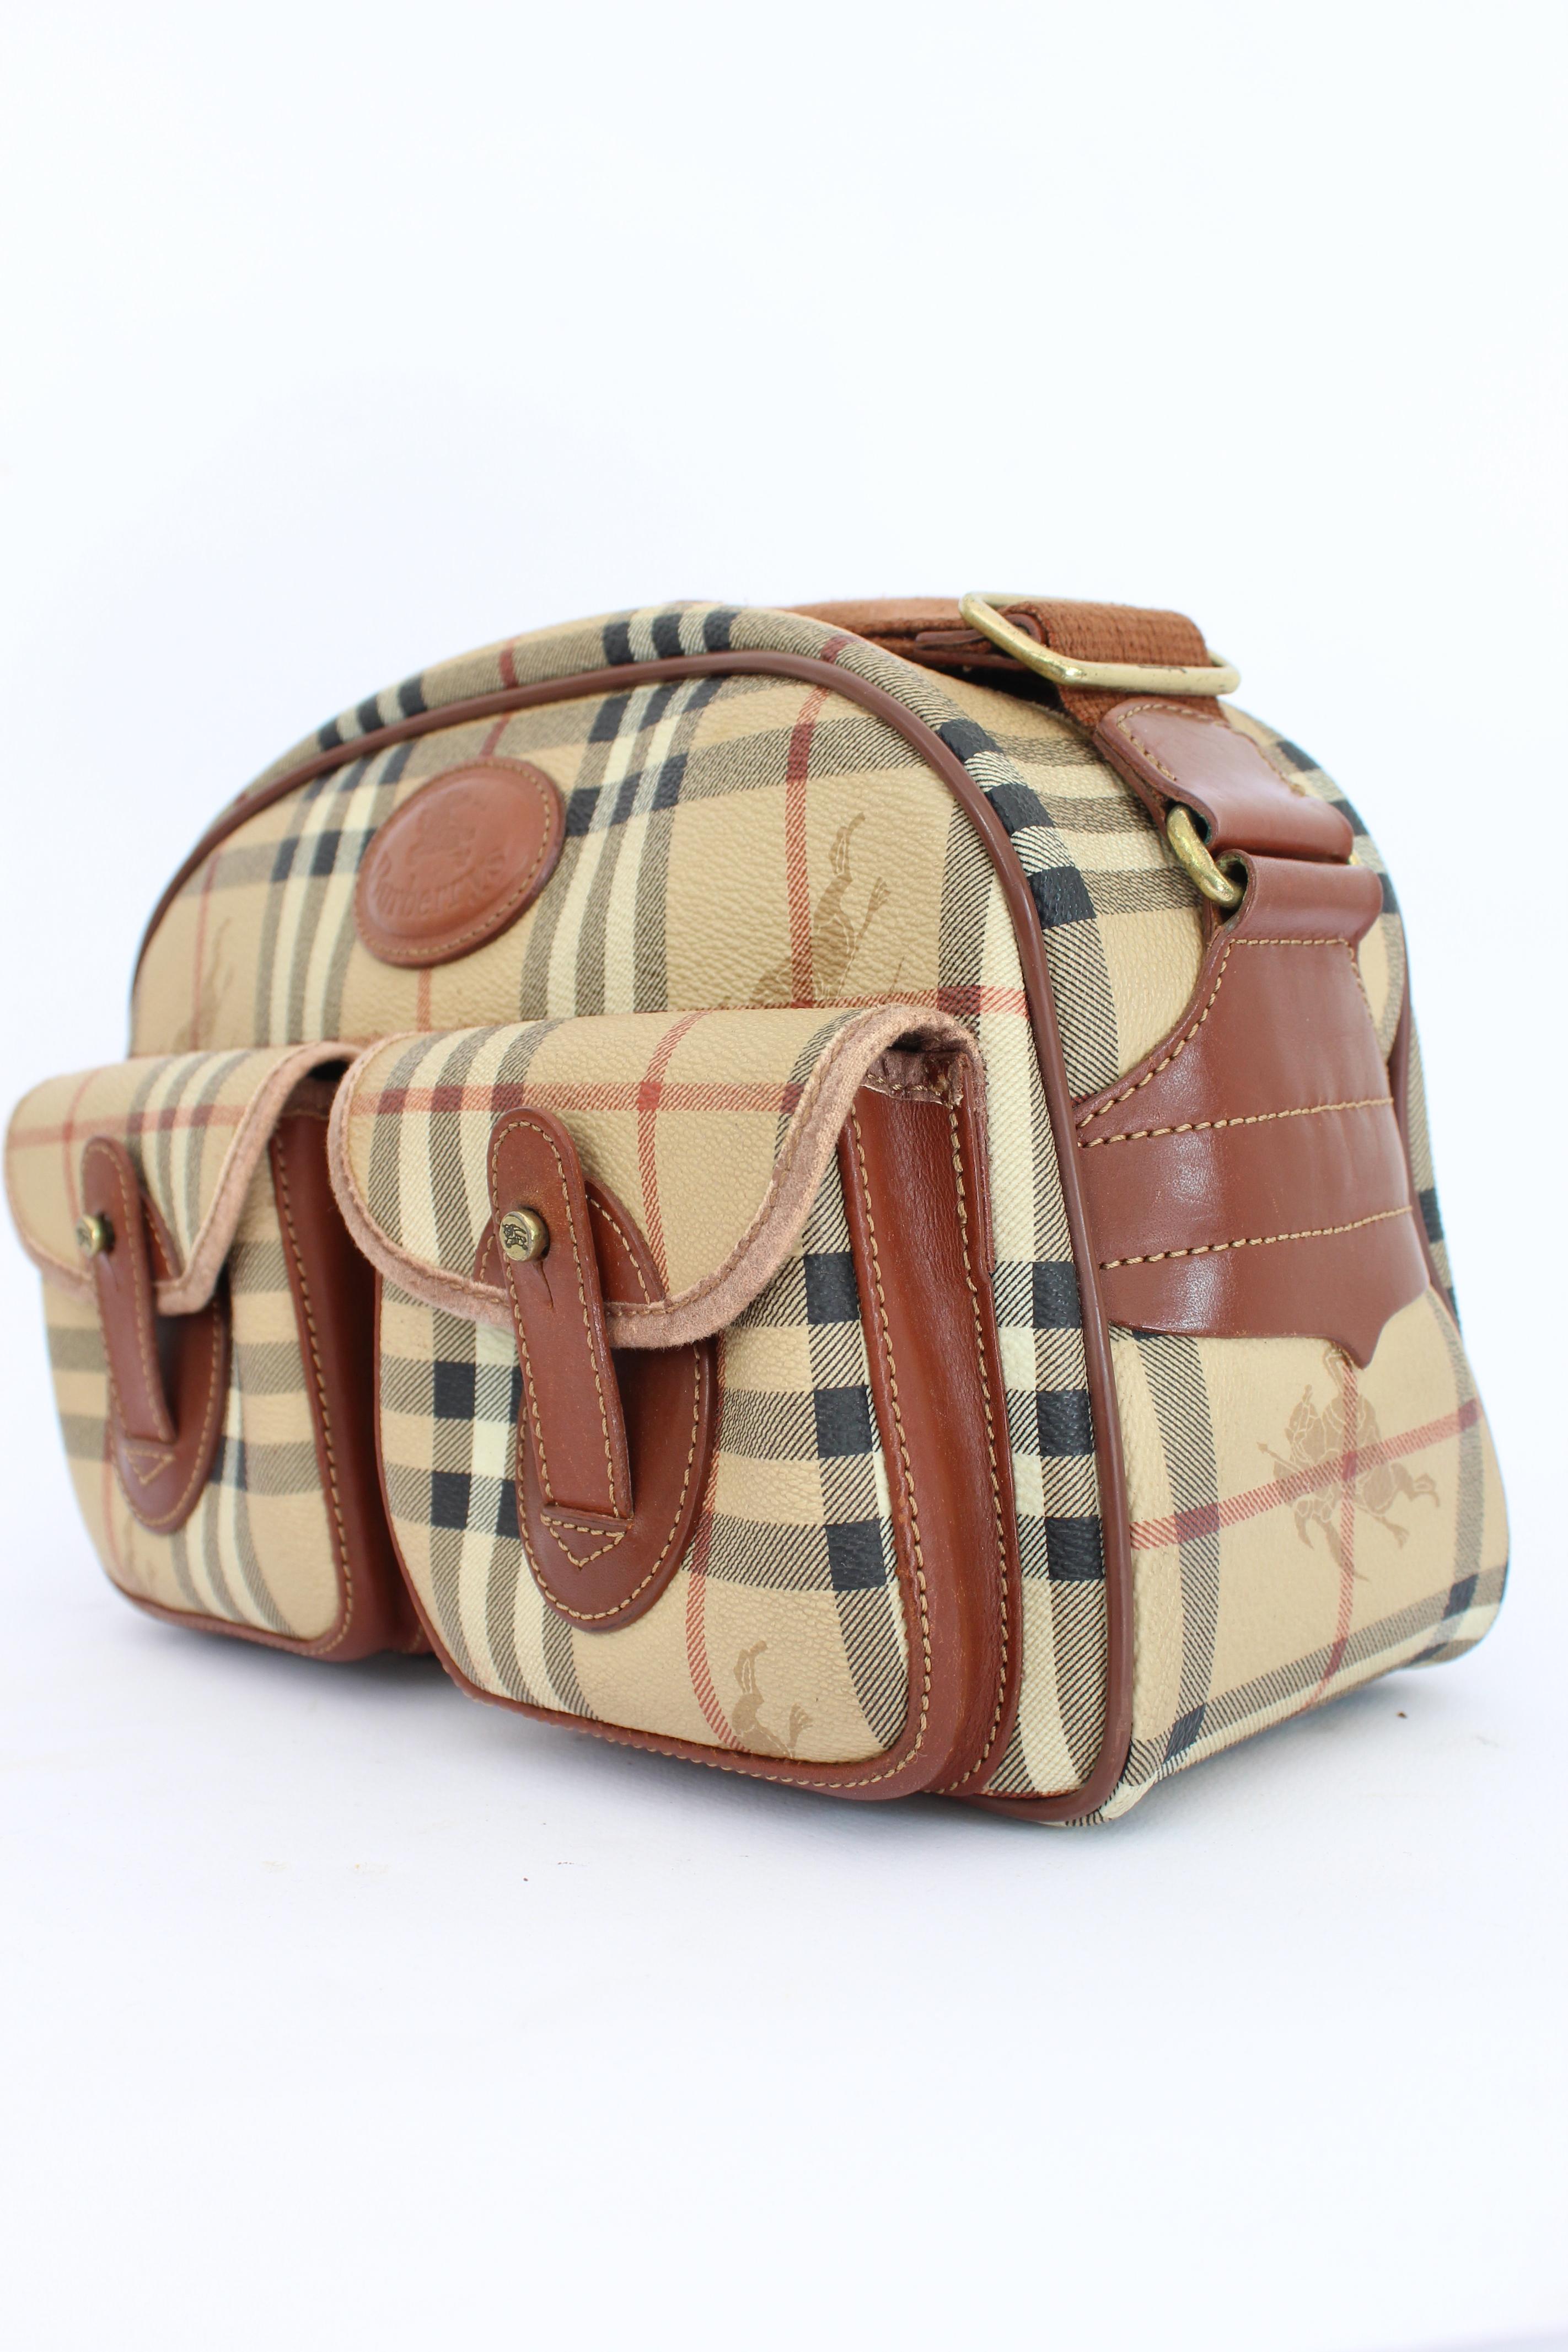 Women's Burberry Beige Brown Leather Canvas Satchel Shoulder Bag